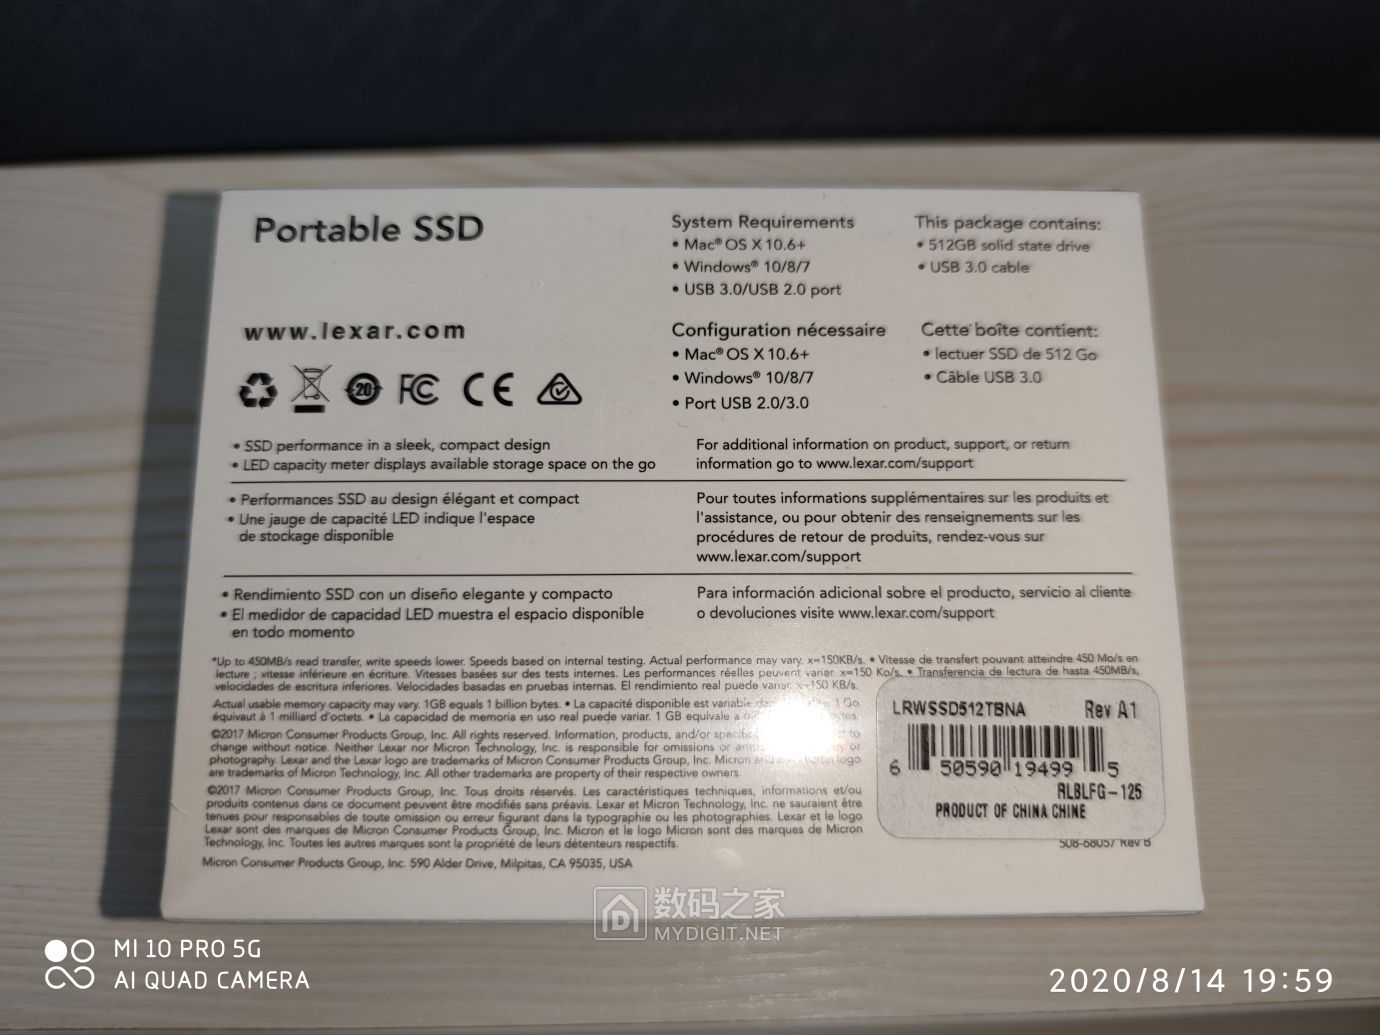 Portable SSD 512GB包装背面